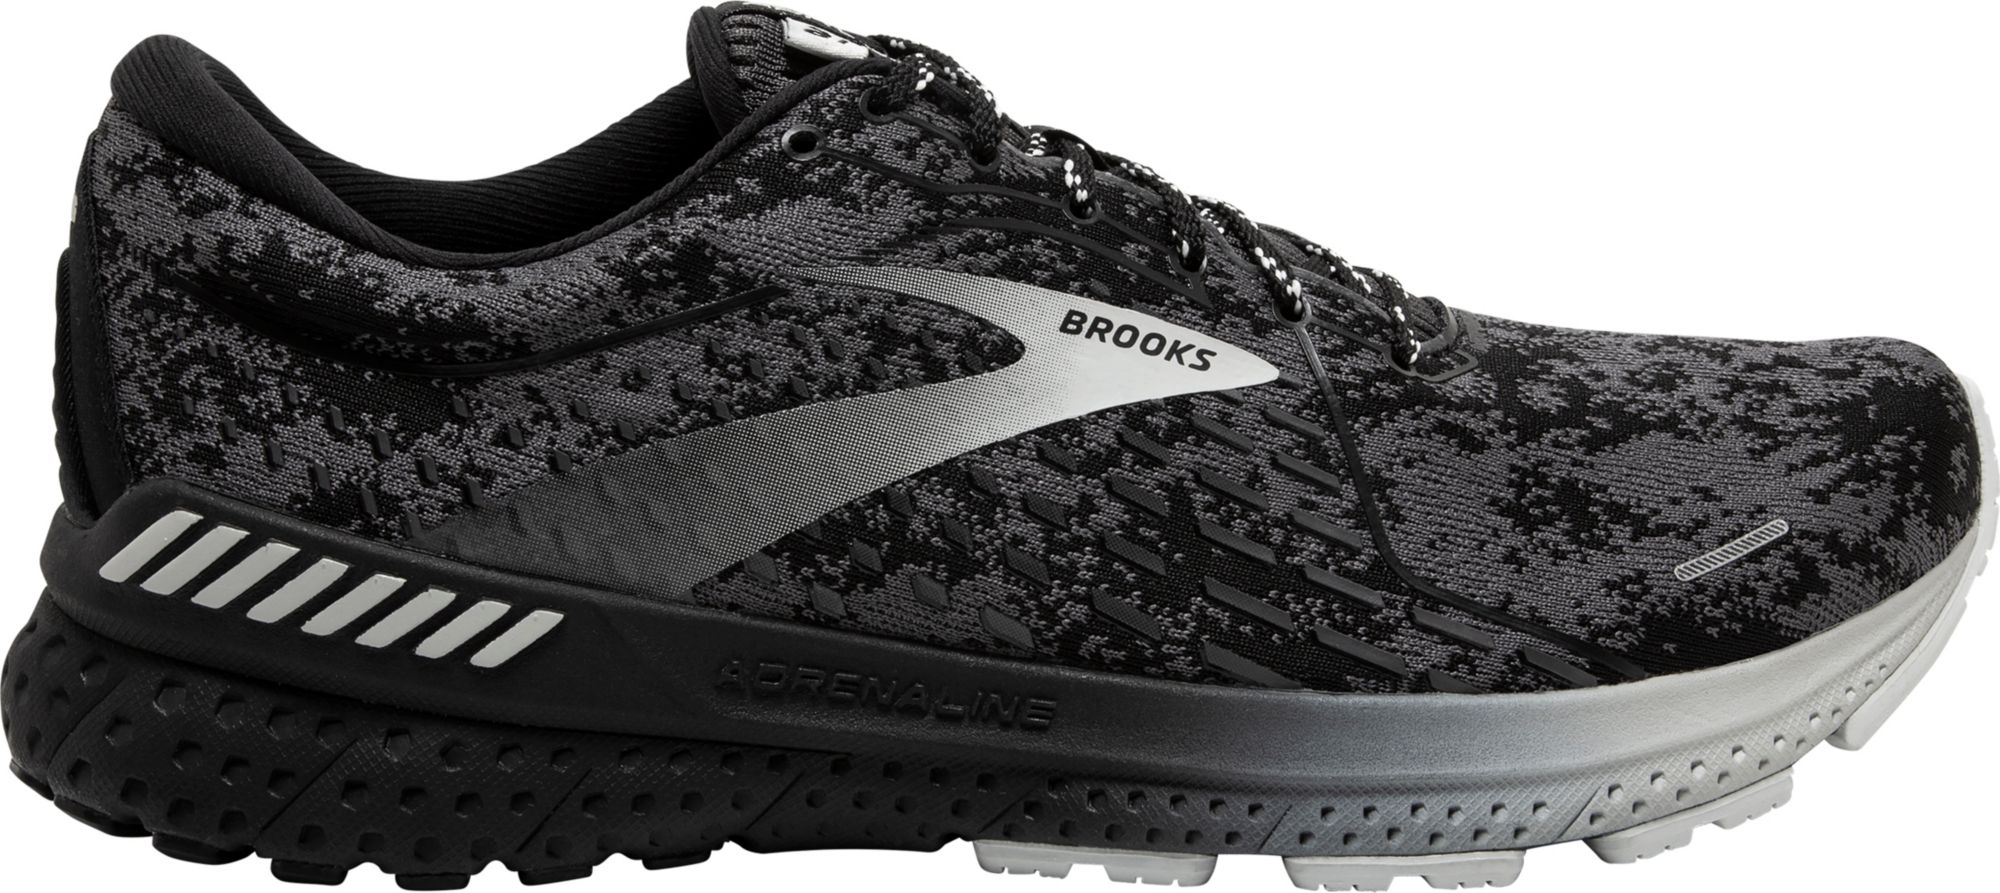 dicks sporting goods brooks running shoes